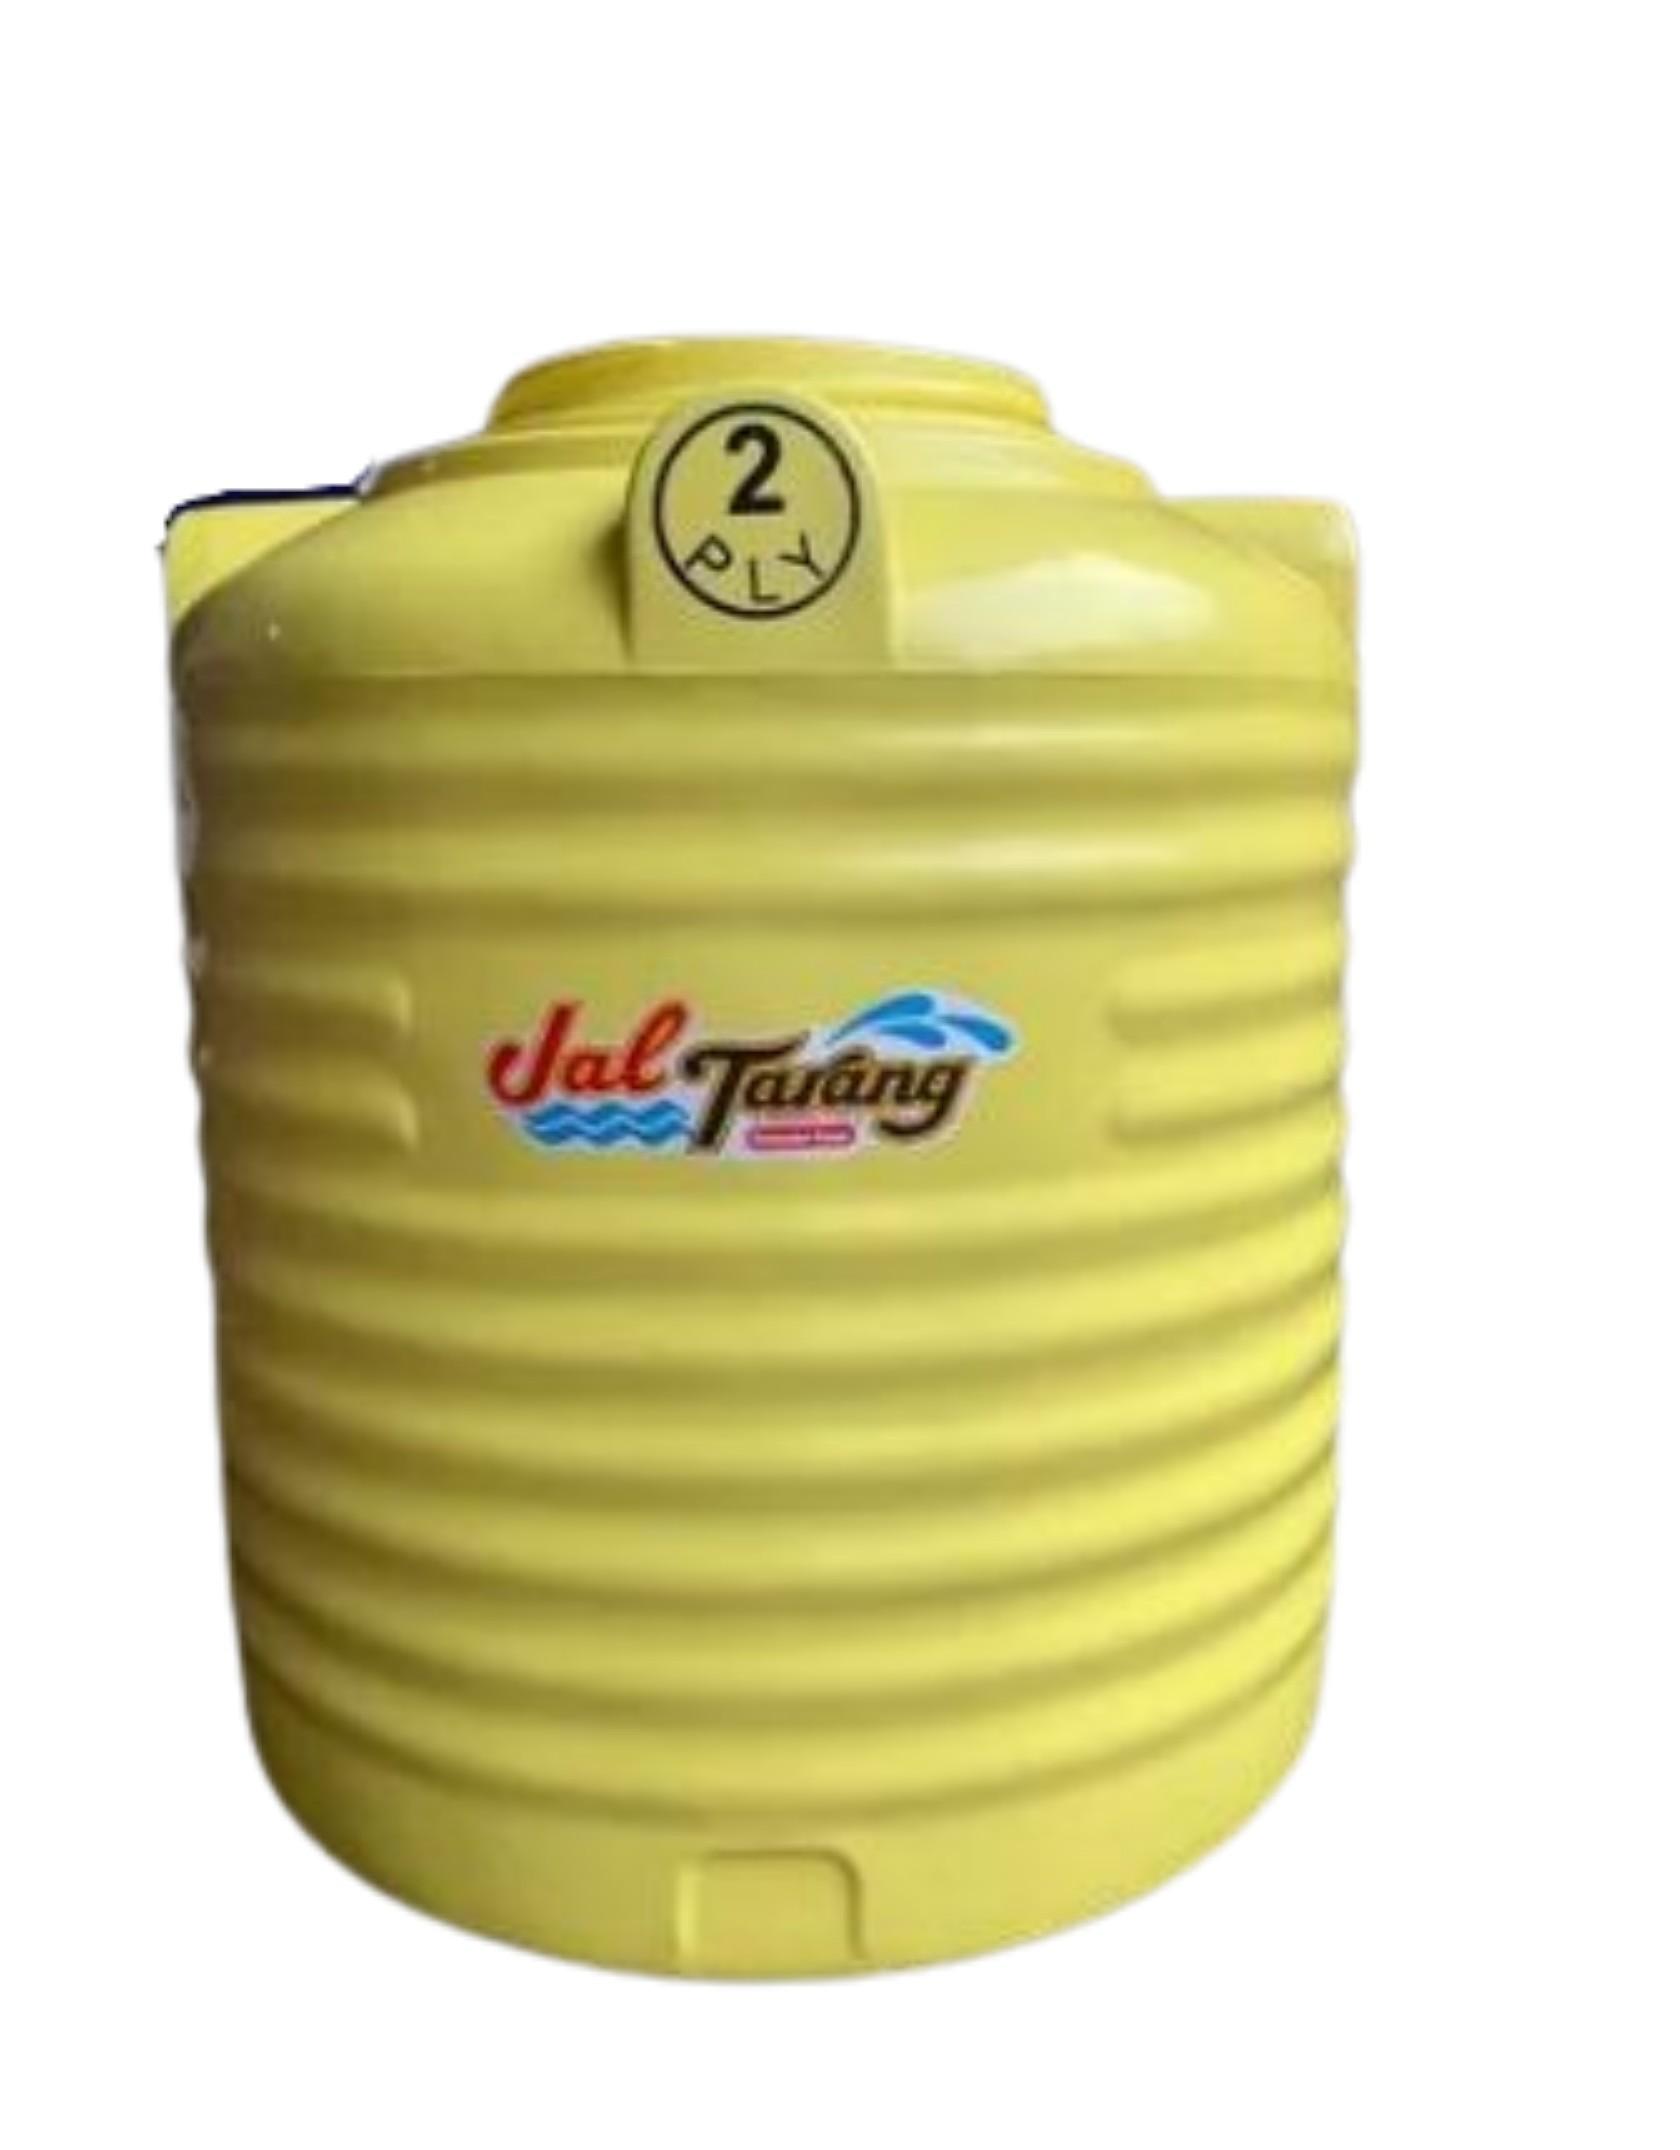 Buy Plastic or PVC Water Storage Tanks Online in India